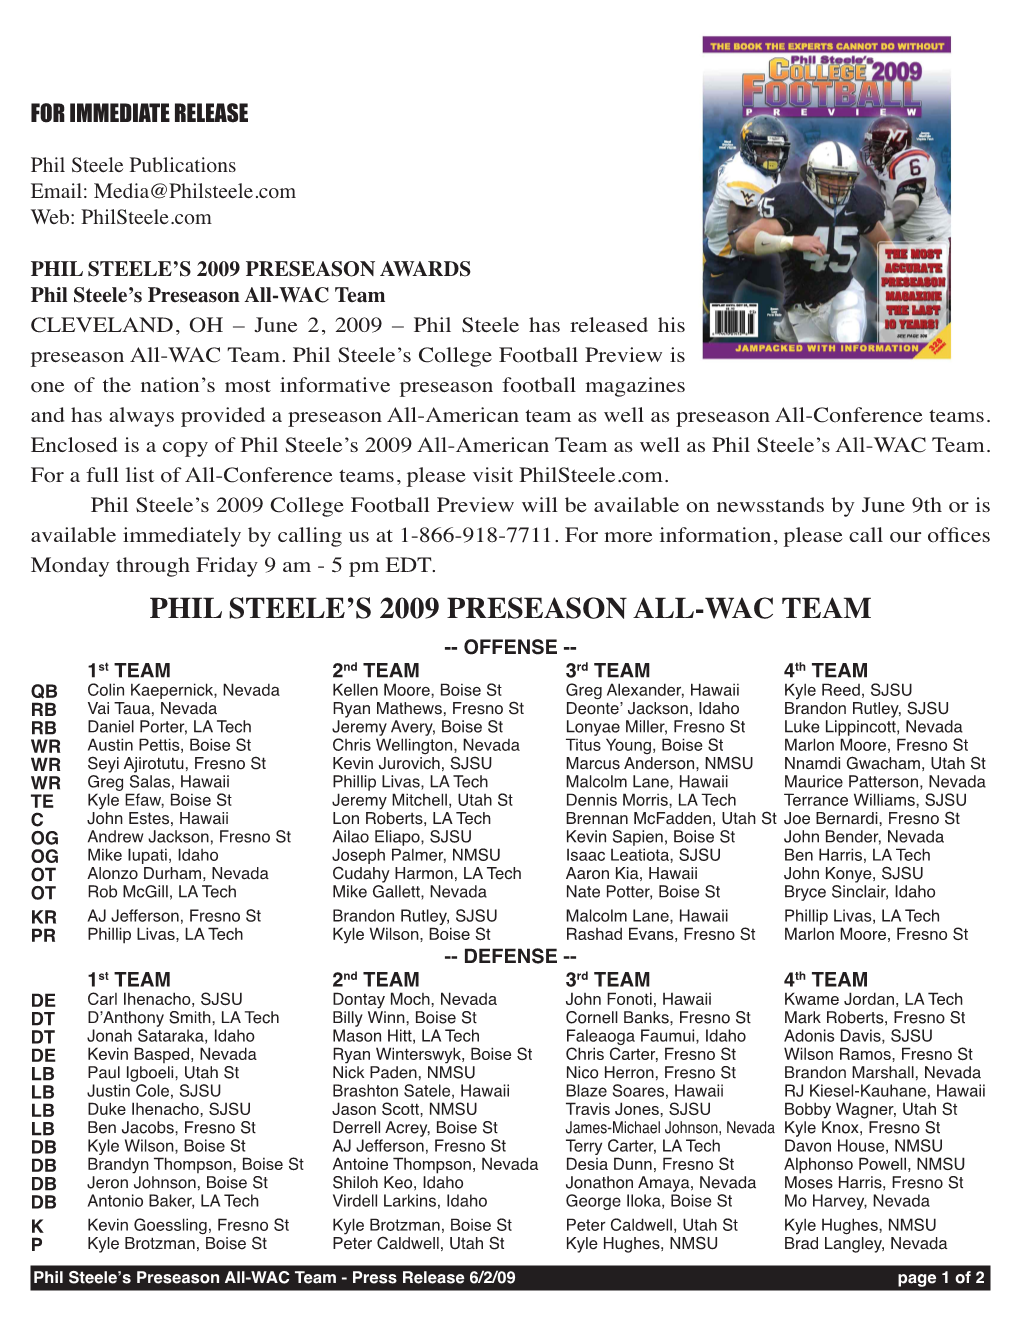 Phil Steele's 2009 Preseason All-Wac Team